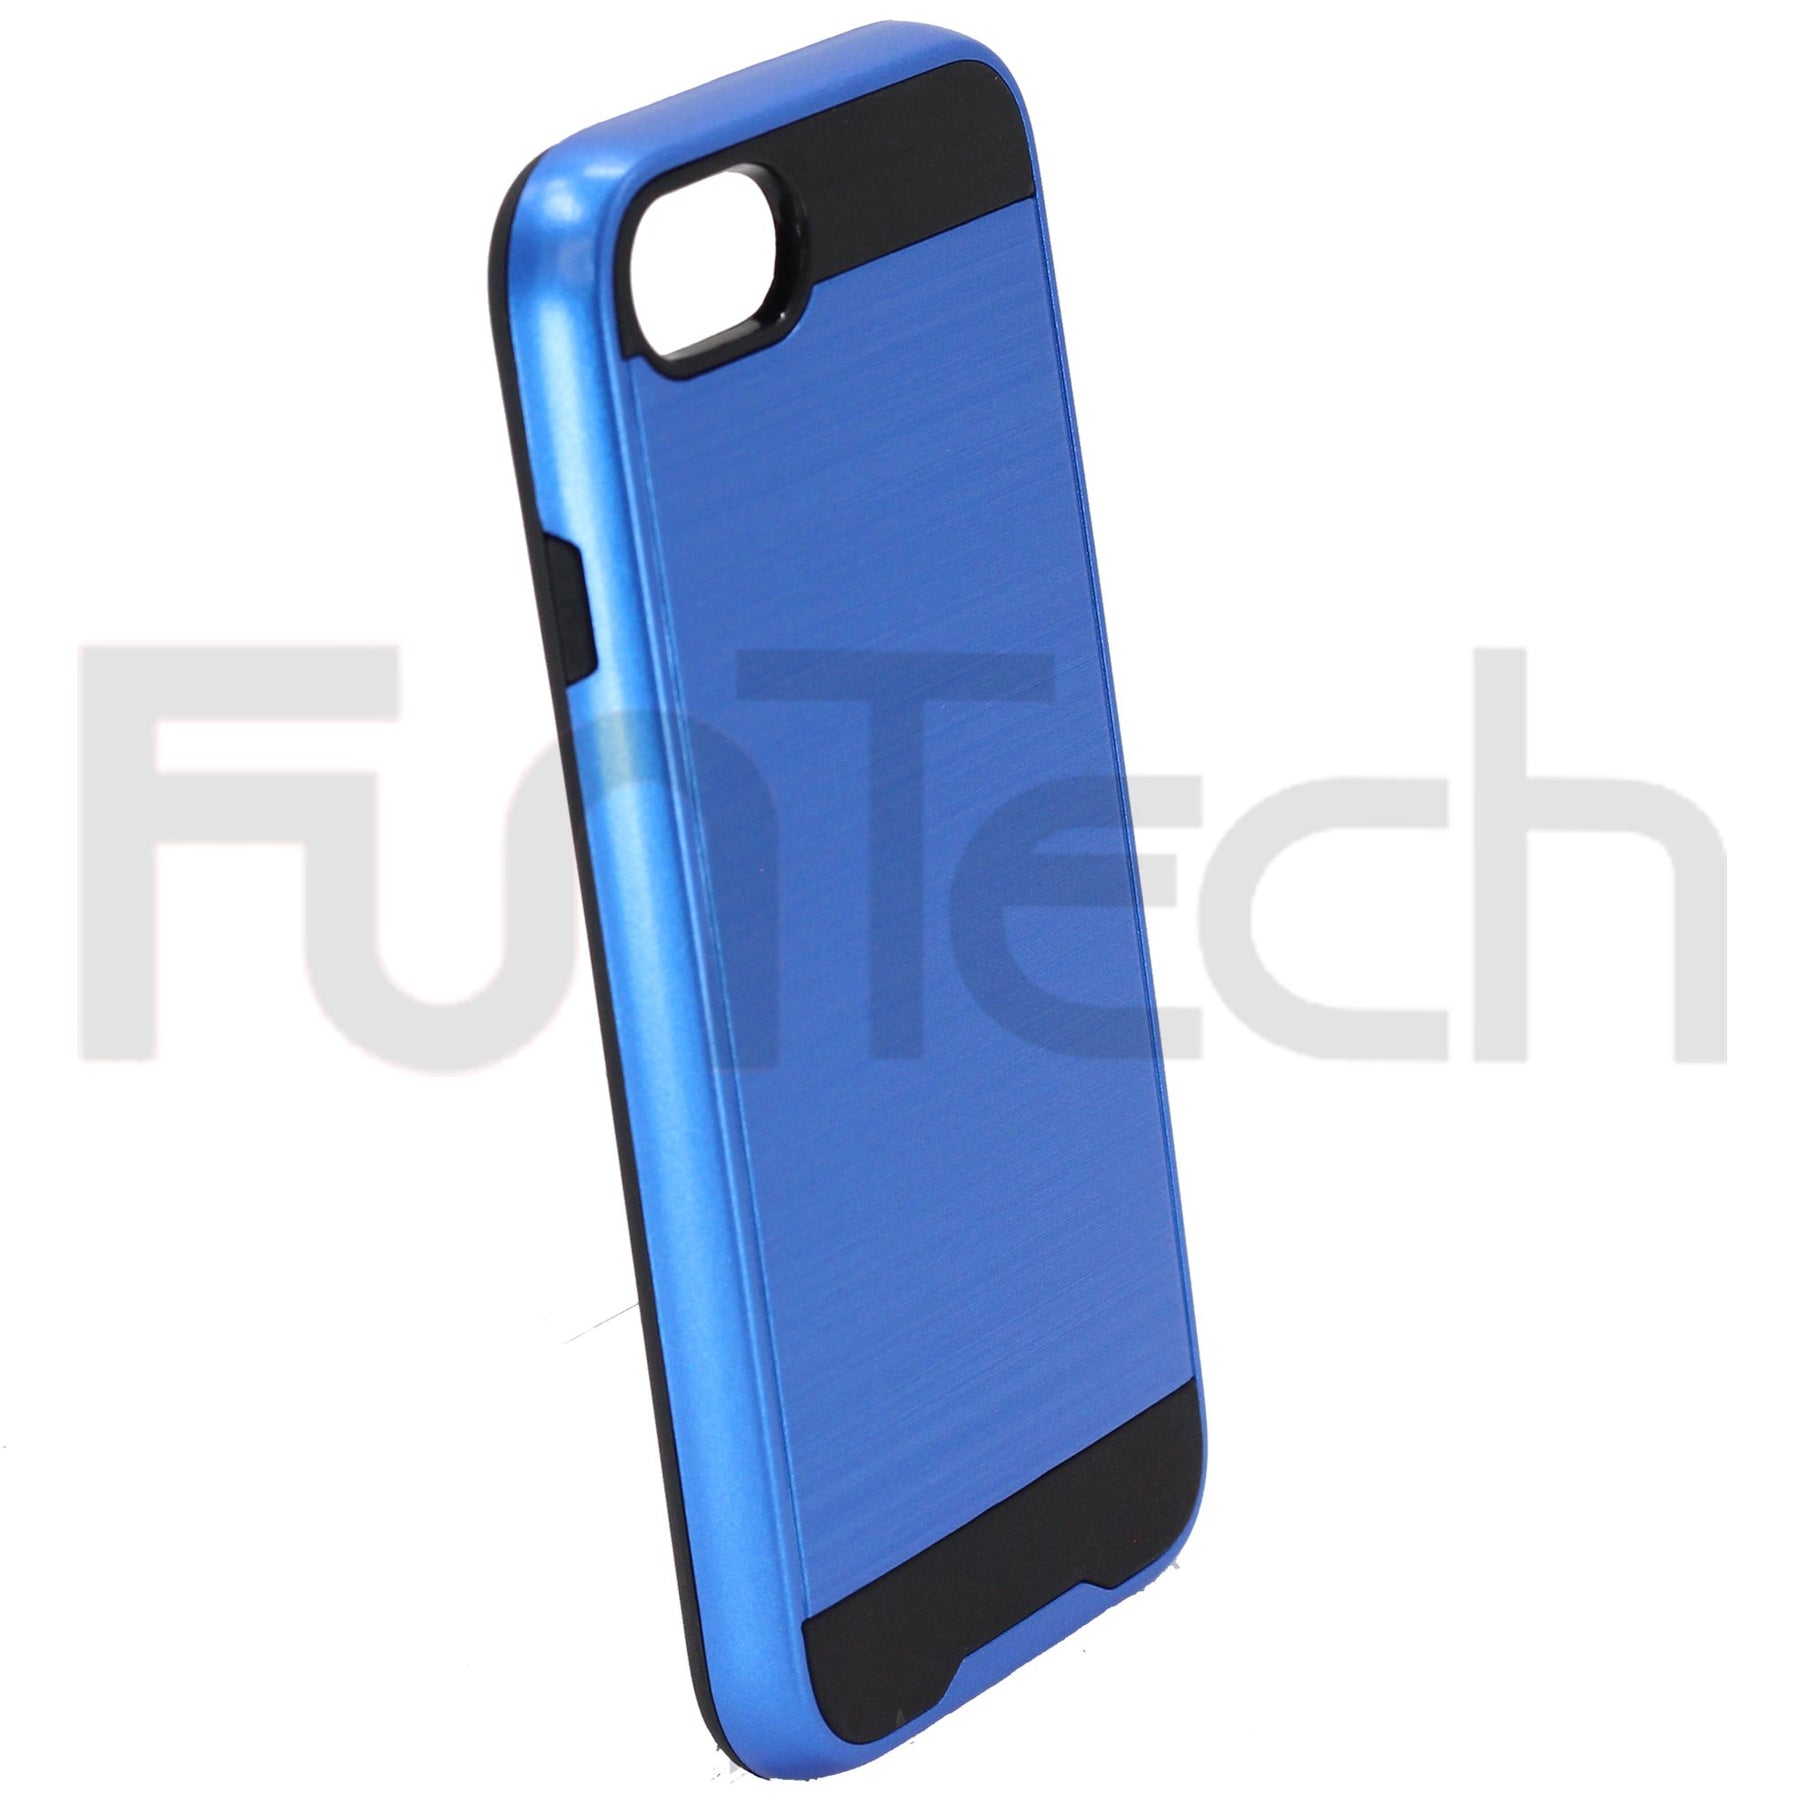 Apple iPhone 7/8 SE2020 Slim  Armor Case Dark Blue